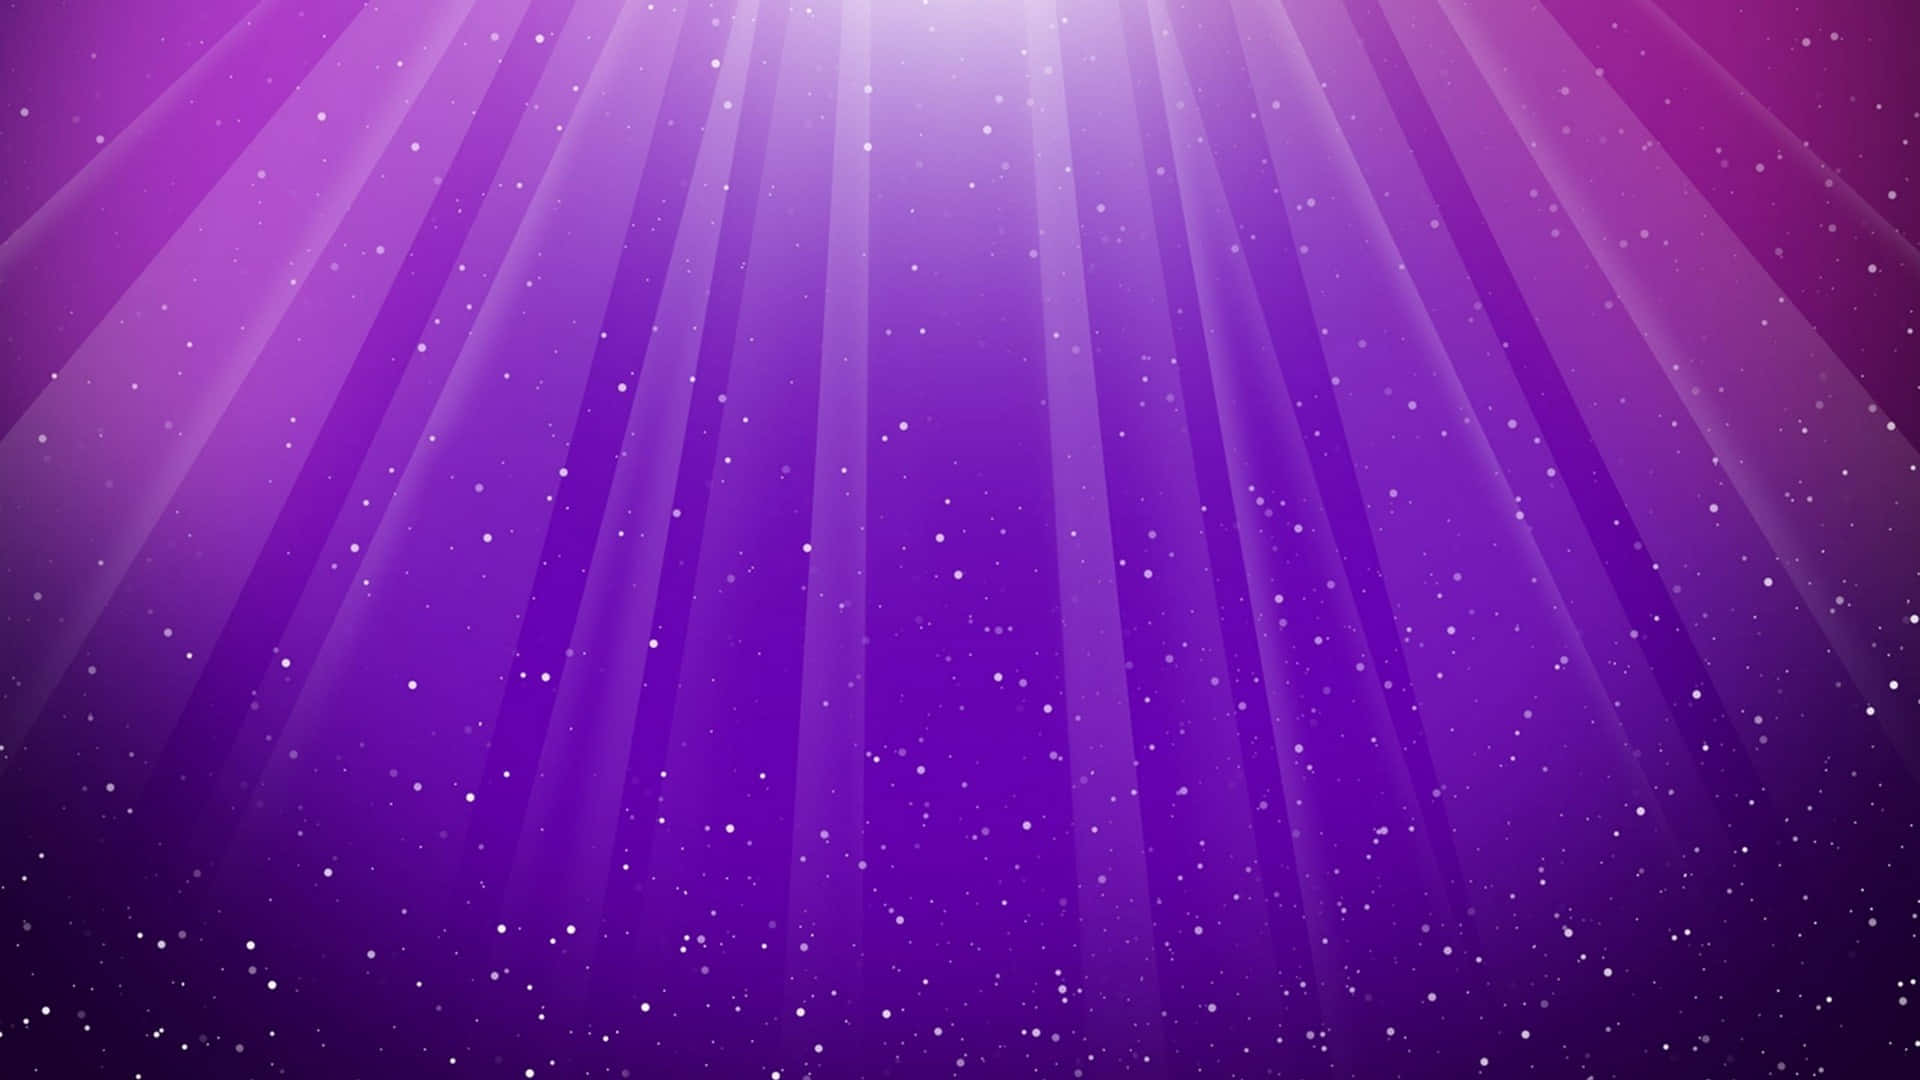 Tonospúrpura Iluminados En Un Remolino De Ensueño. Fondo de pantalla